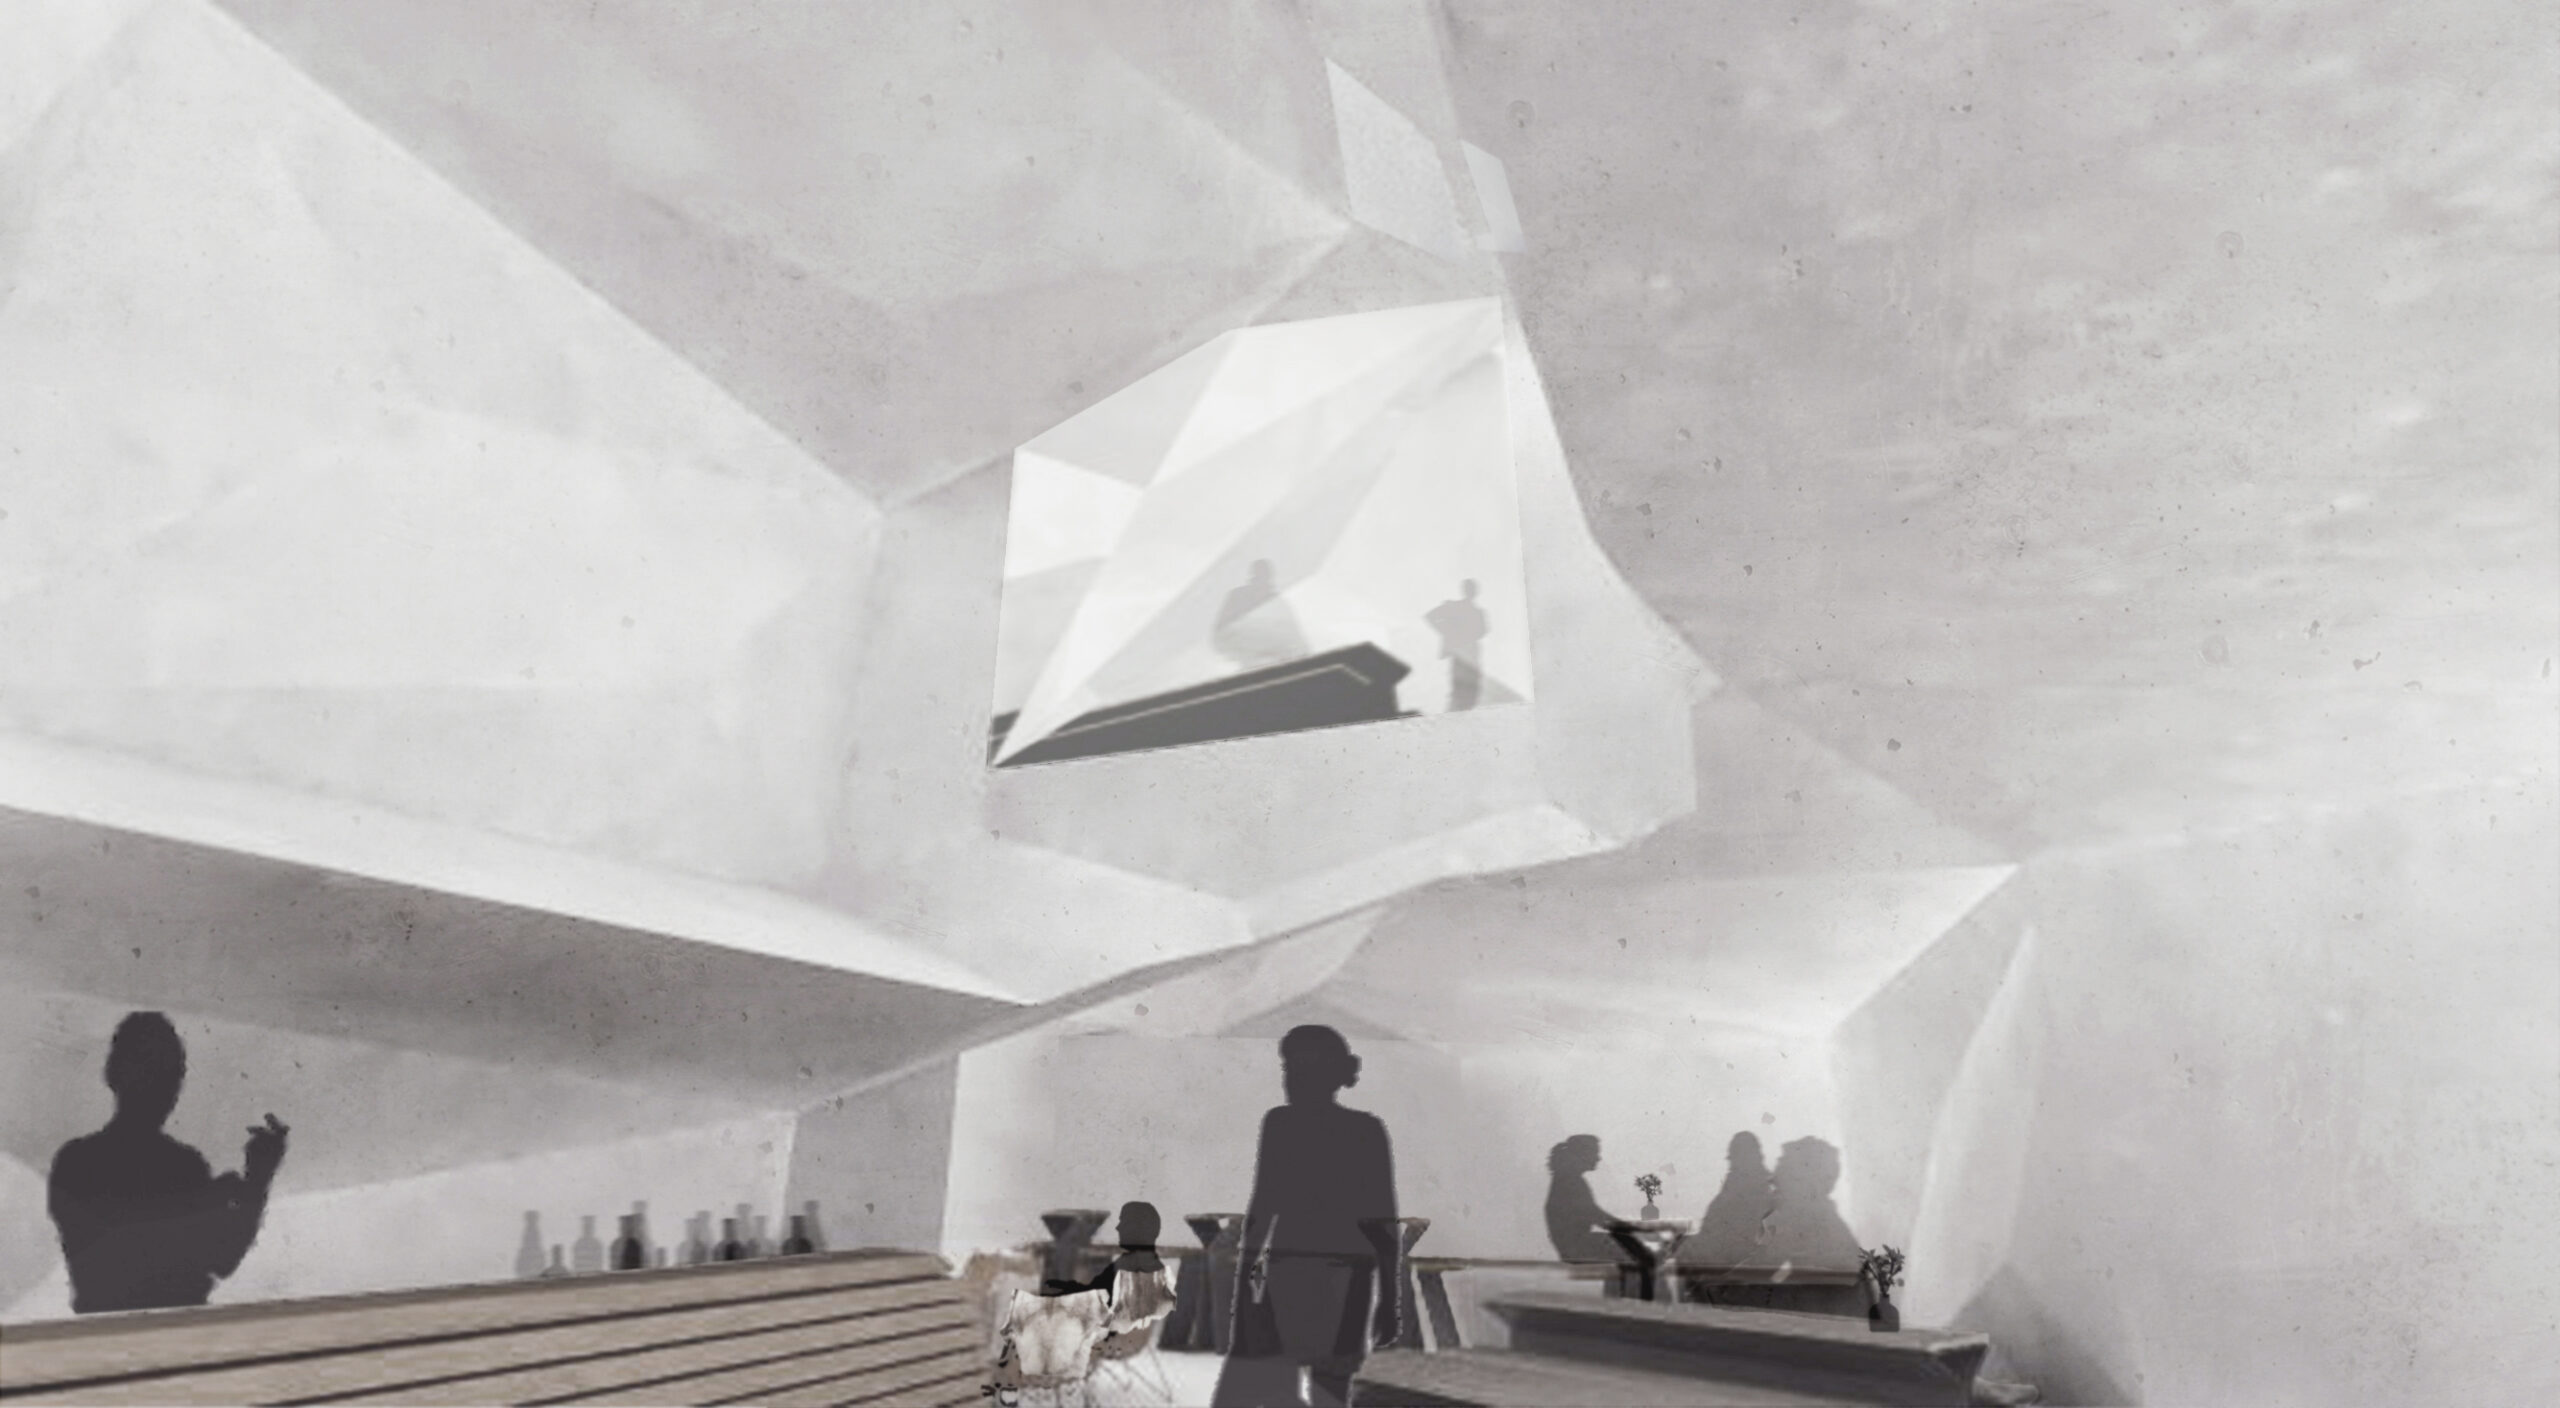 Michael-Becker-Architects-Architekten-Gipfelstation-Nebelhorn-Perspektive-K09